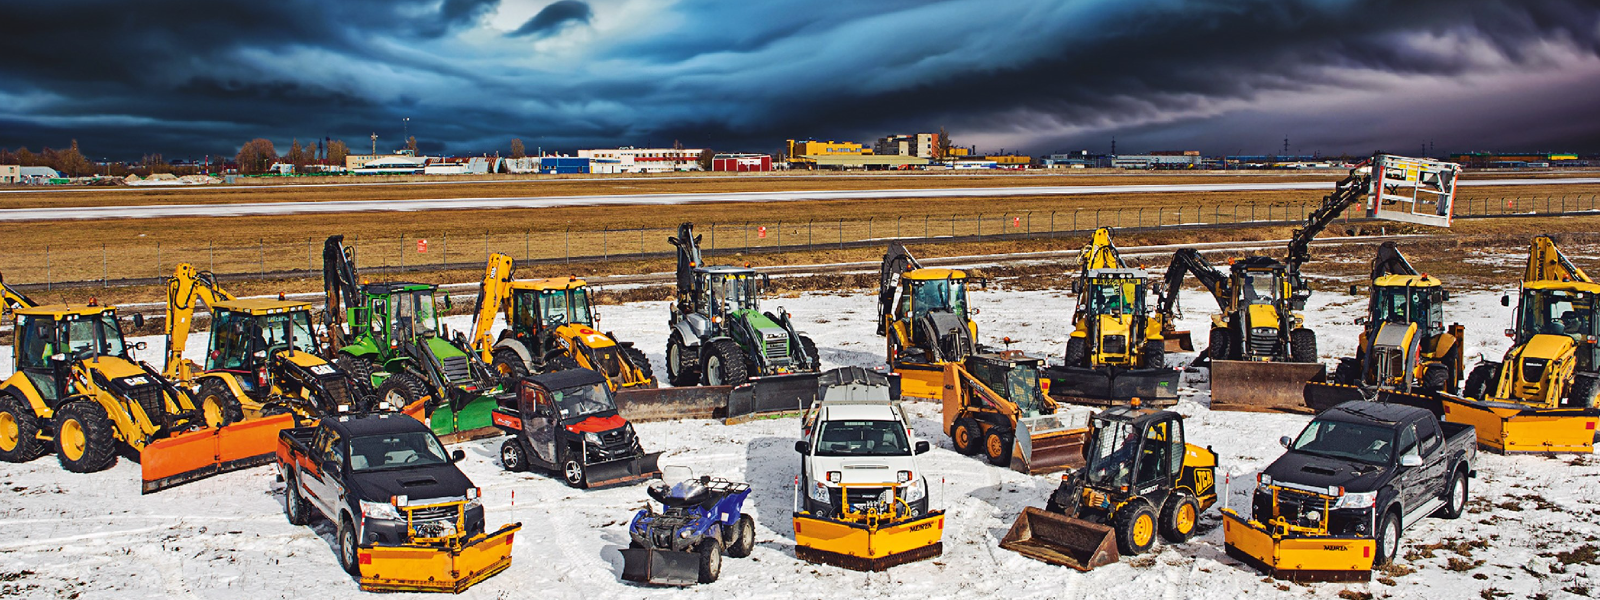 RKM TEAM OÜ - vacuum lift, construction machinery rental, wheel loaders, mini excavators, property maintenance and snow c...